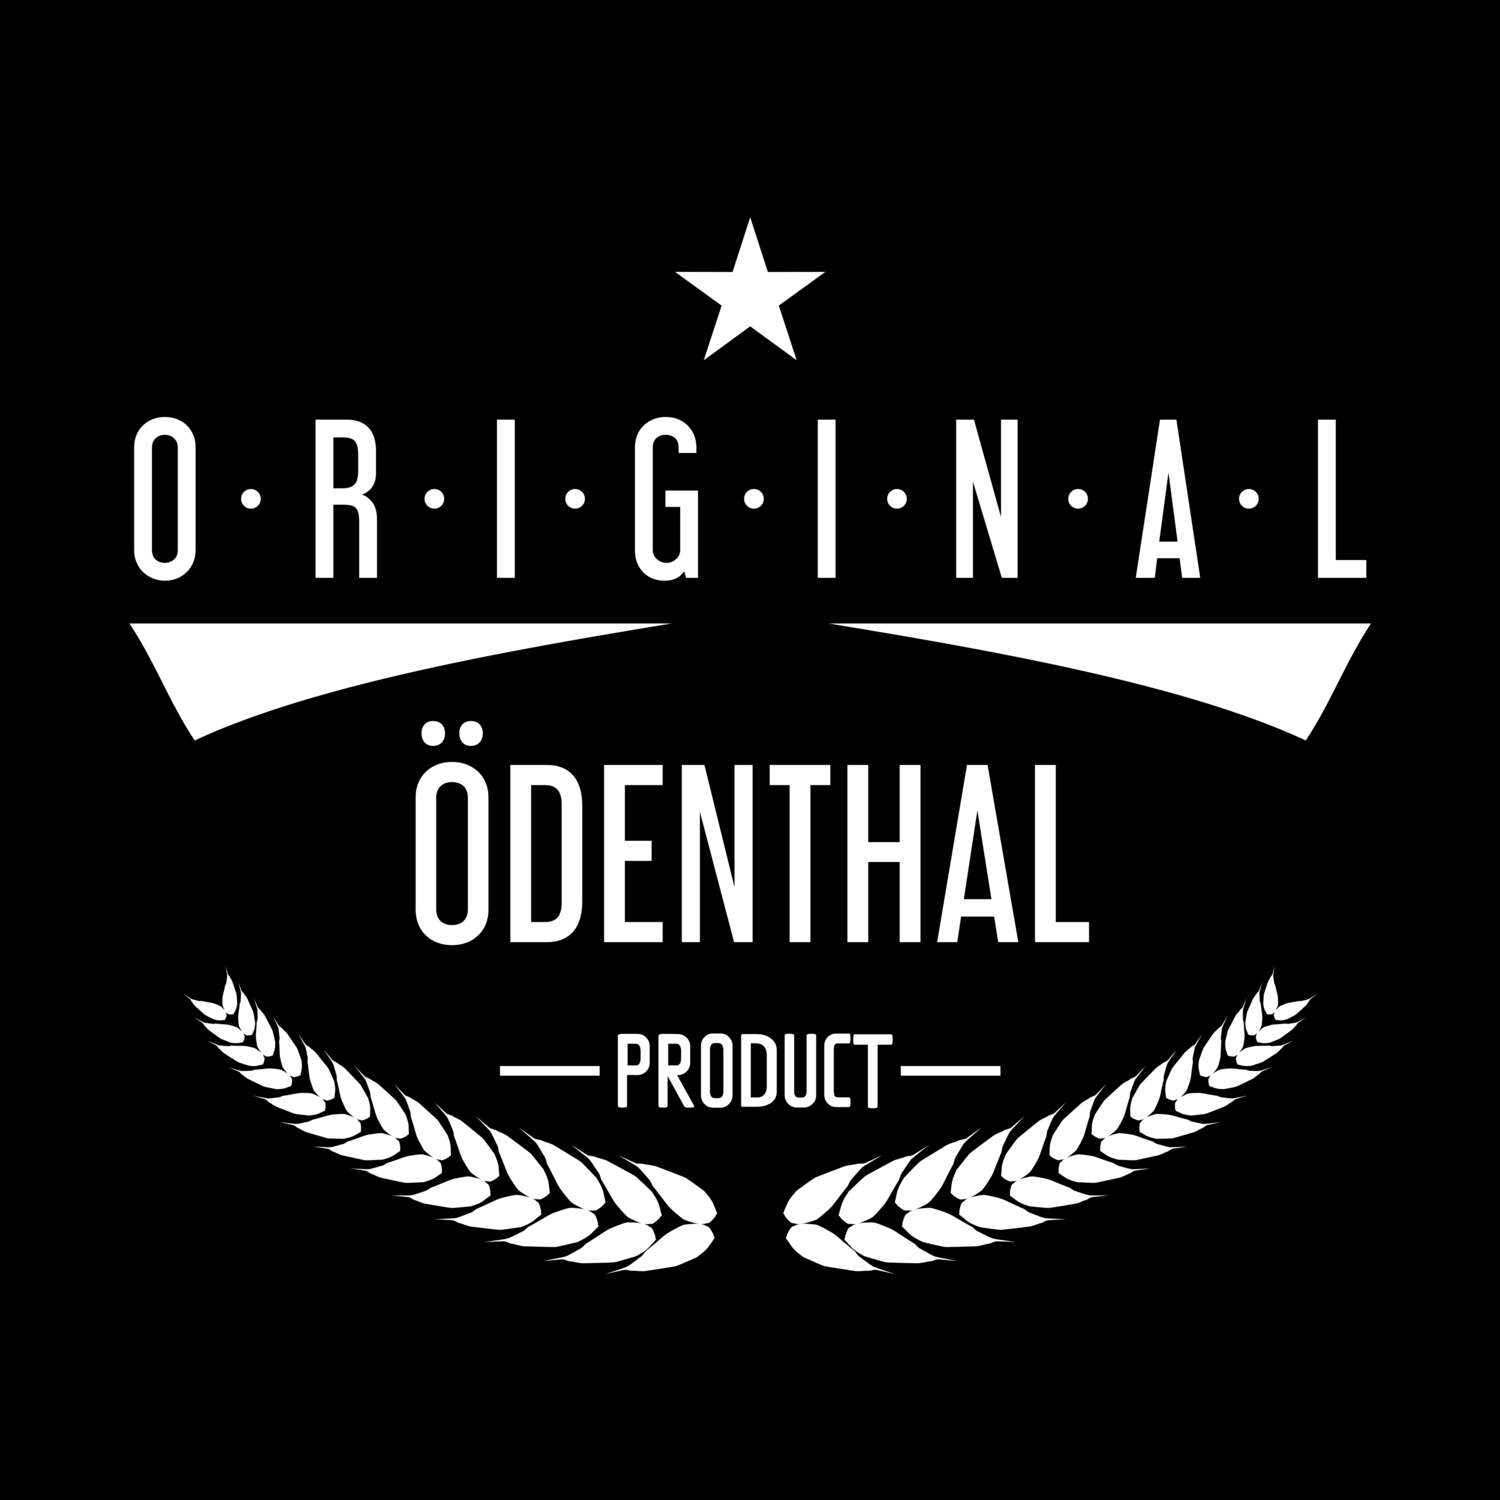 Ödenthal T-Shirt »Original Product«